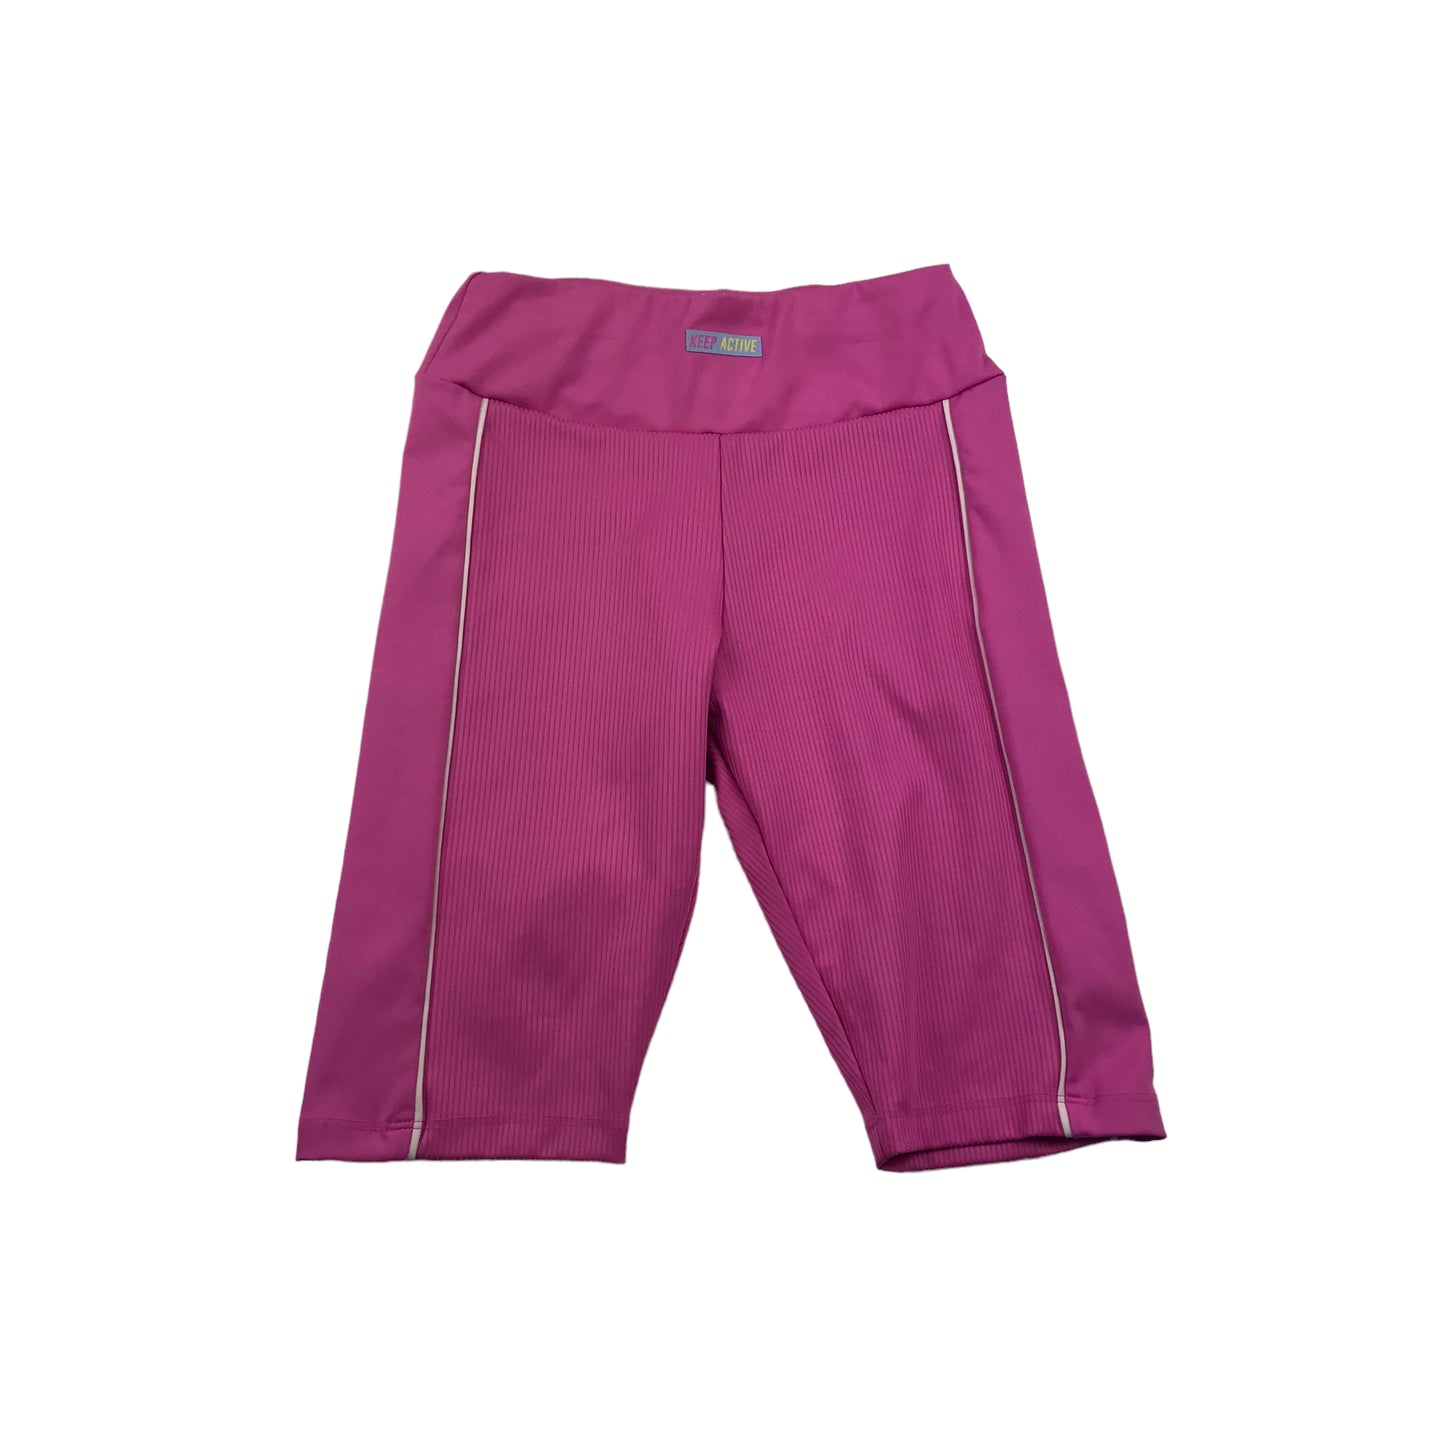 Zara Pink Shorts Style Sports Leggings Age 11